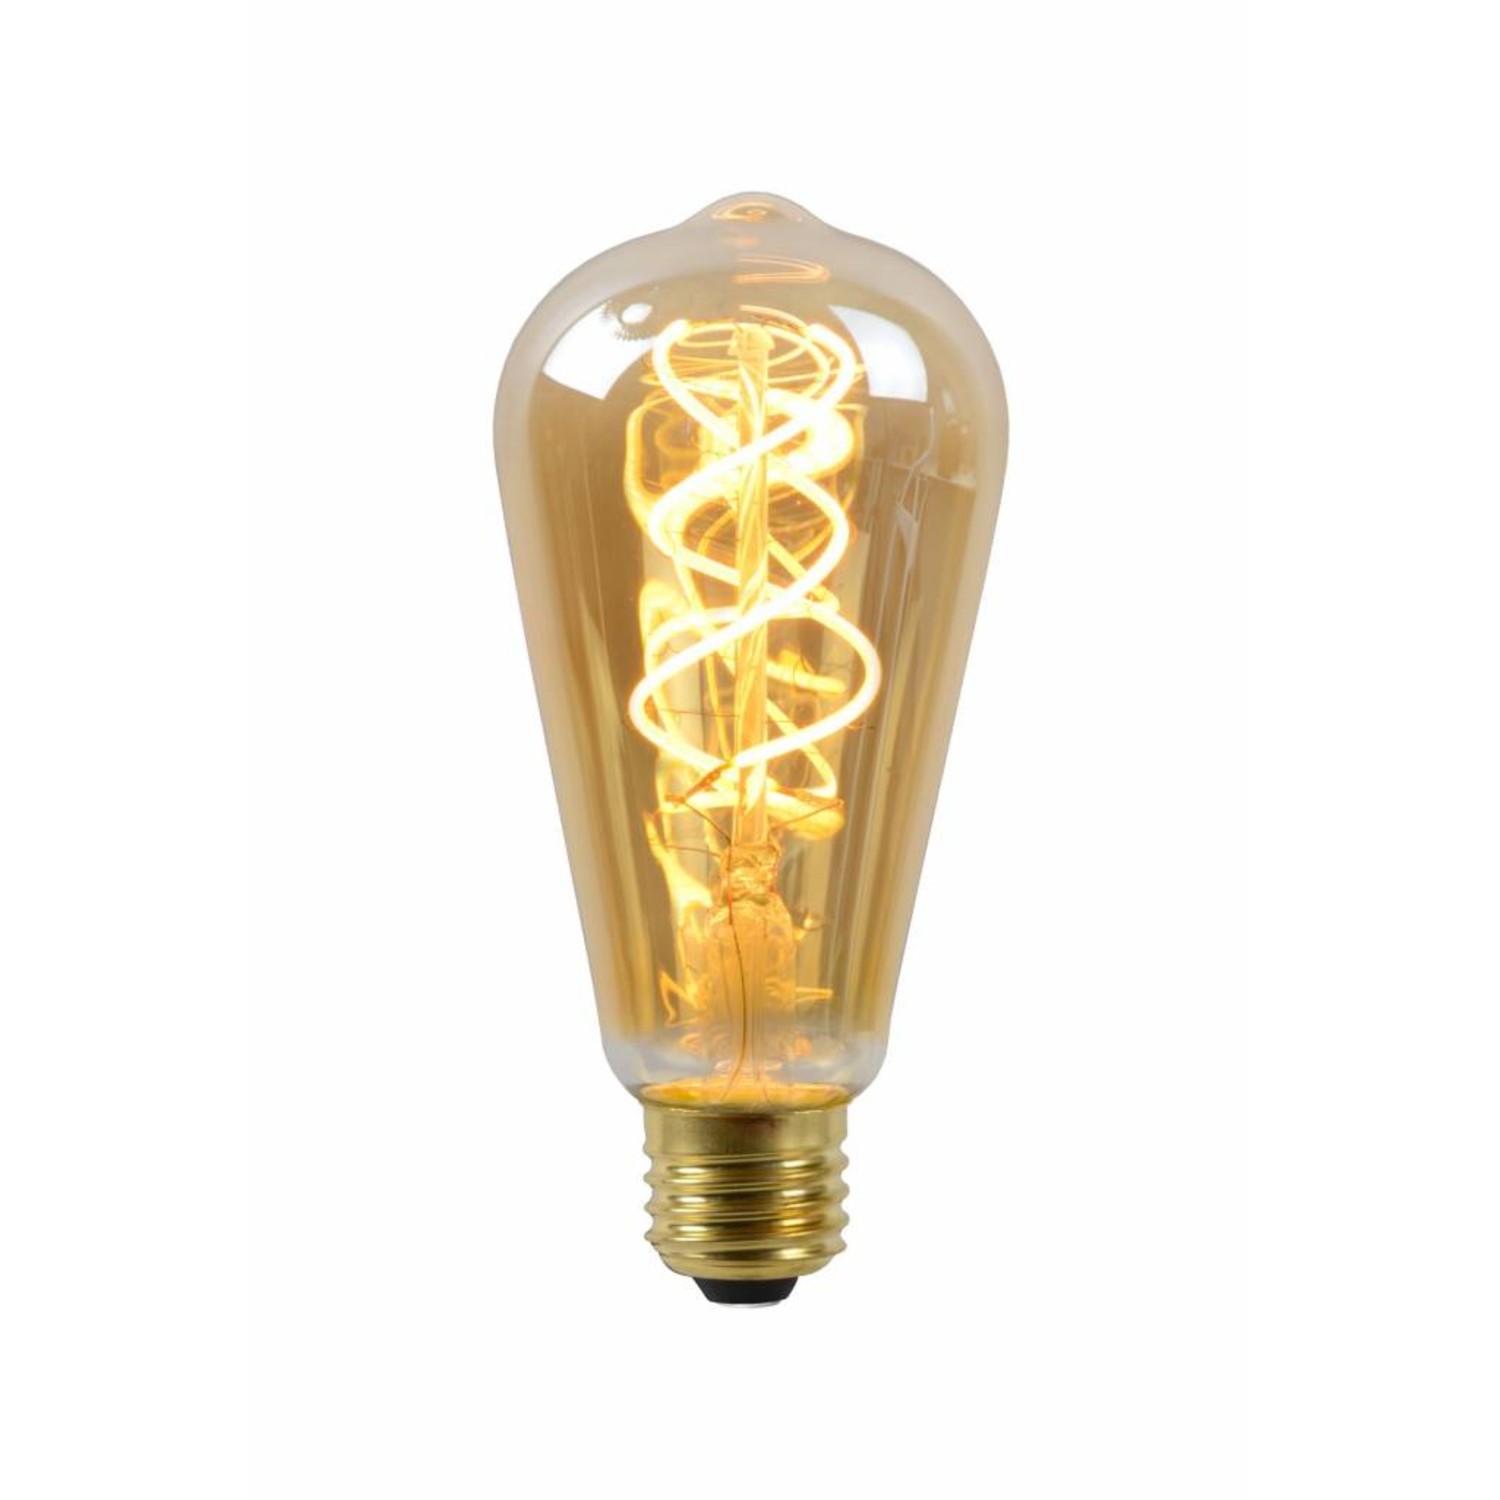 Smeren Whitney timmerman Lucide Dimbare LED filament lamp Ø 6,4 cm kooldraadlamp-effect -  Homecompanyshop.nl